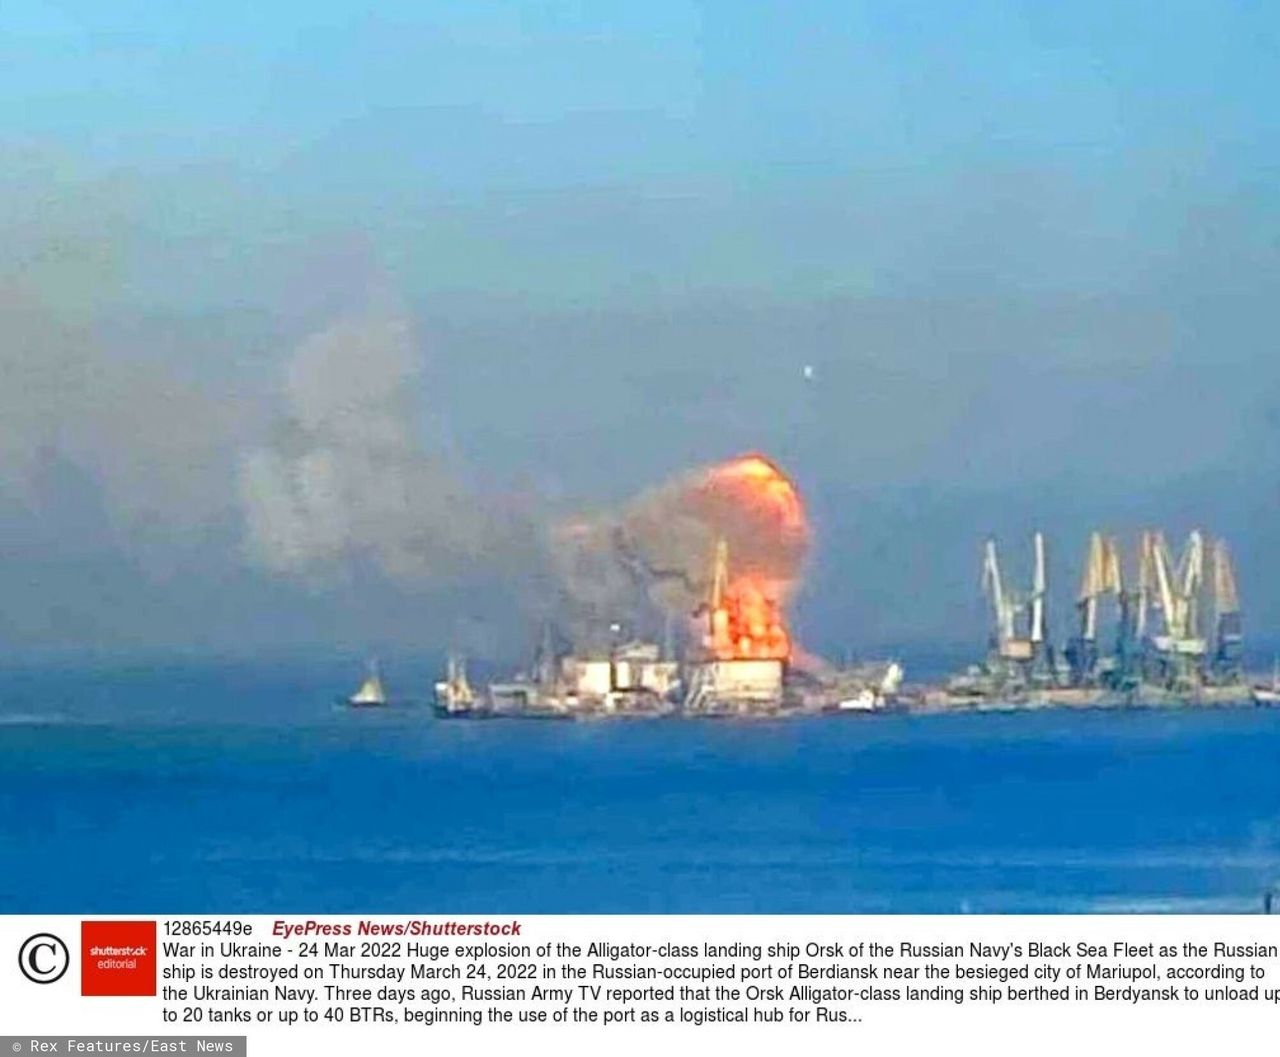 Ukraine inflicts severe damage on Russia's fleet, destroying key assets